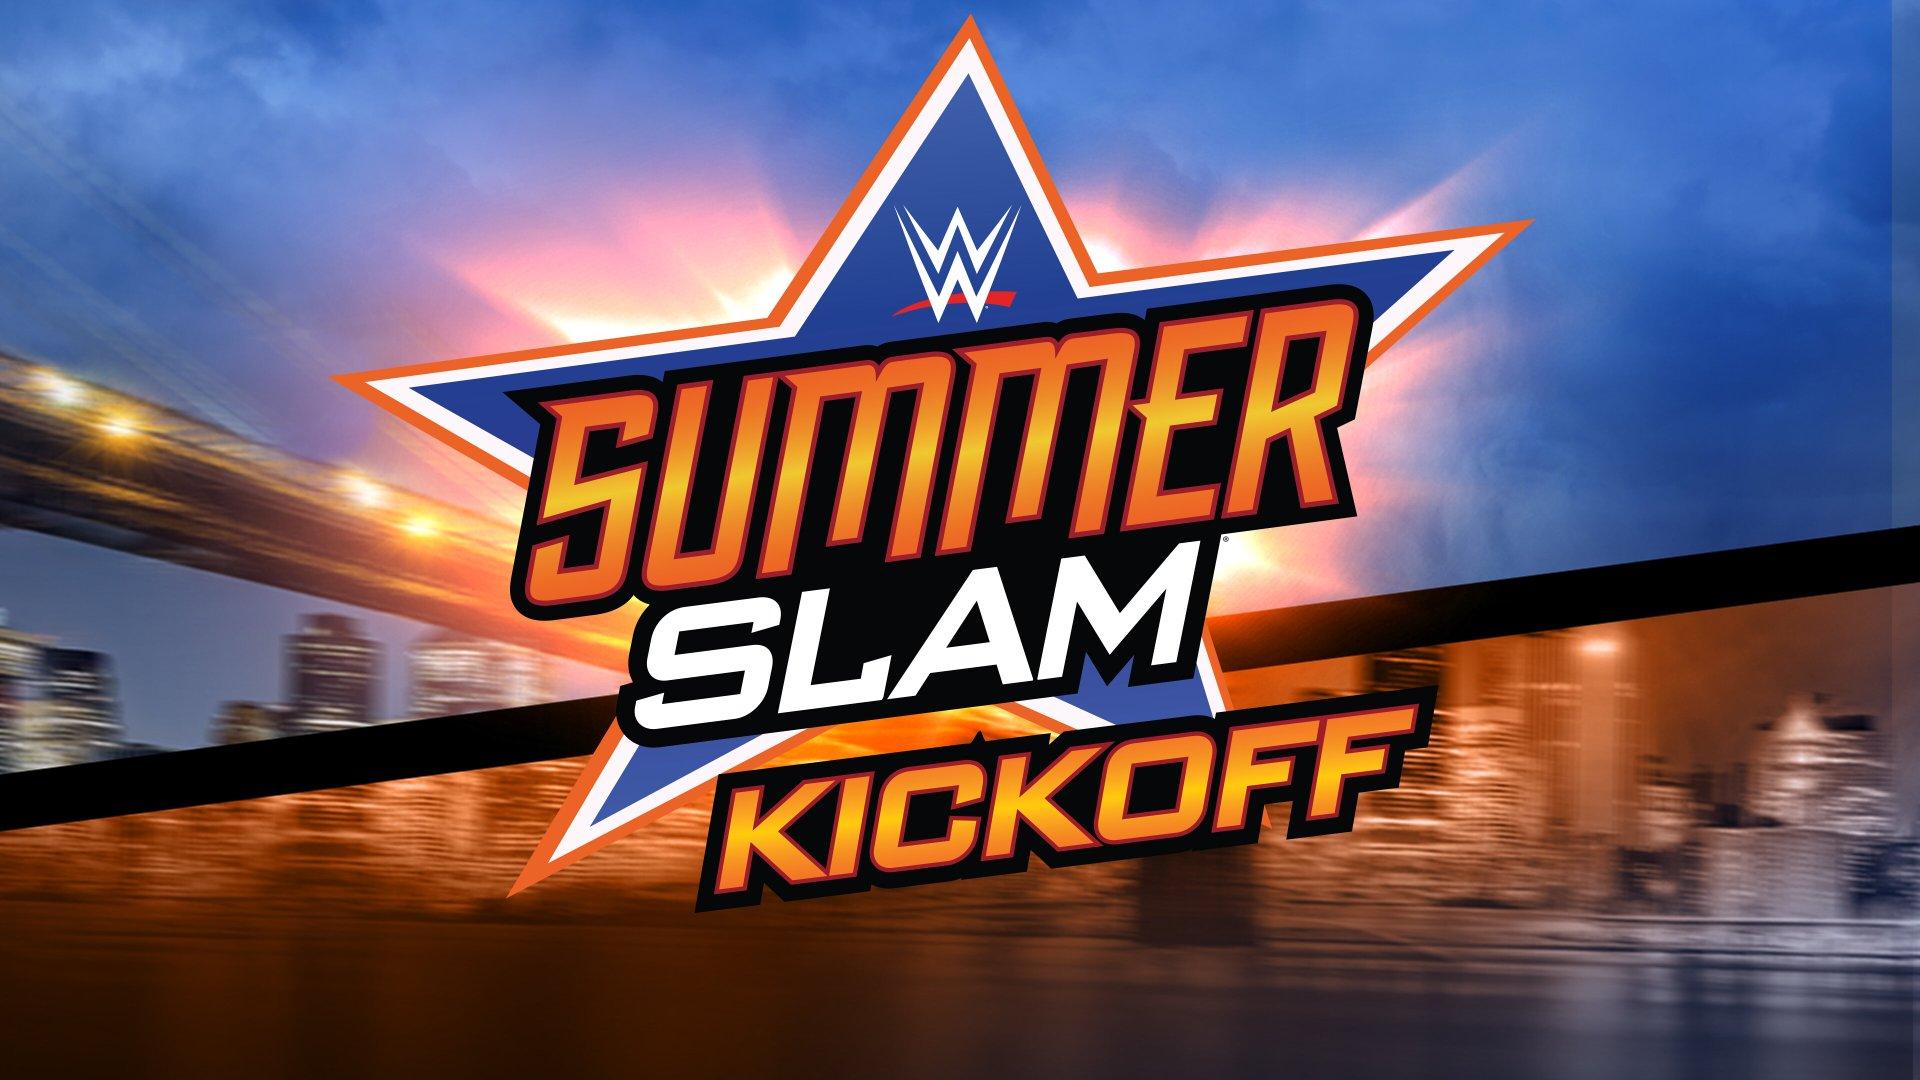 WWE SummerSlam 2016 Kickoff